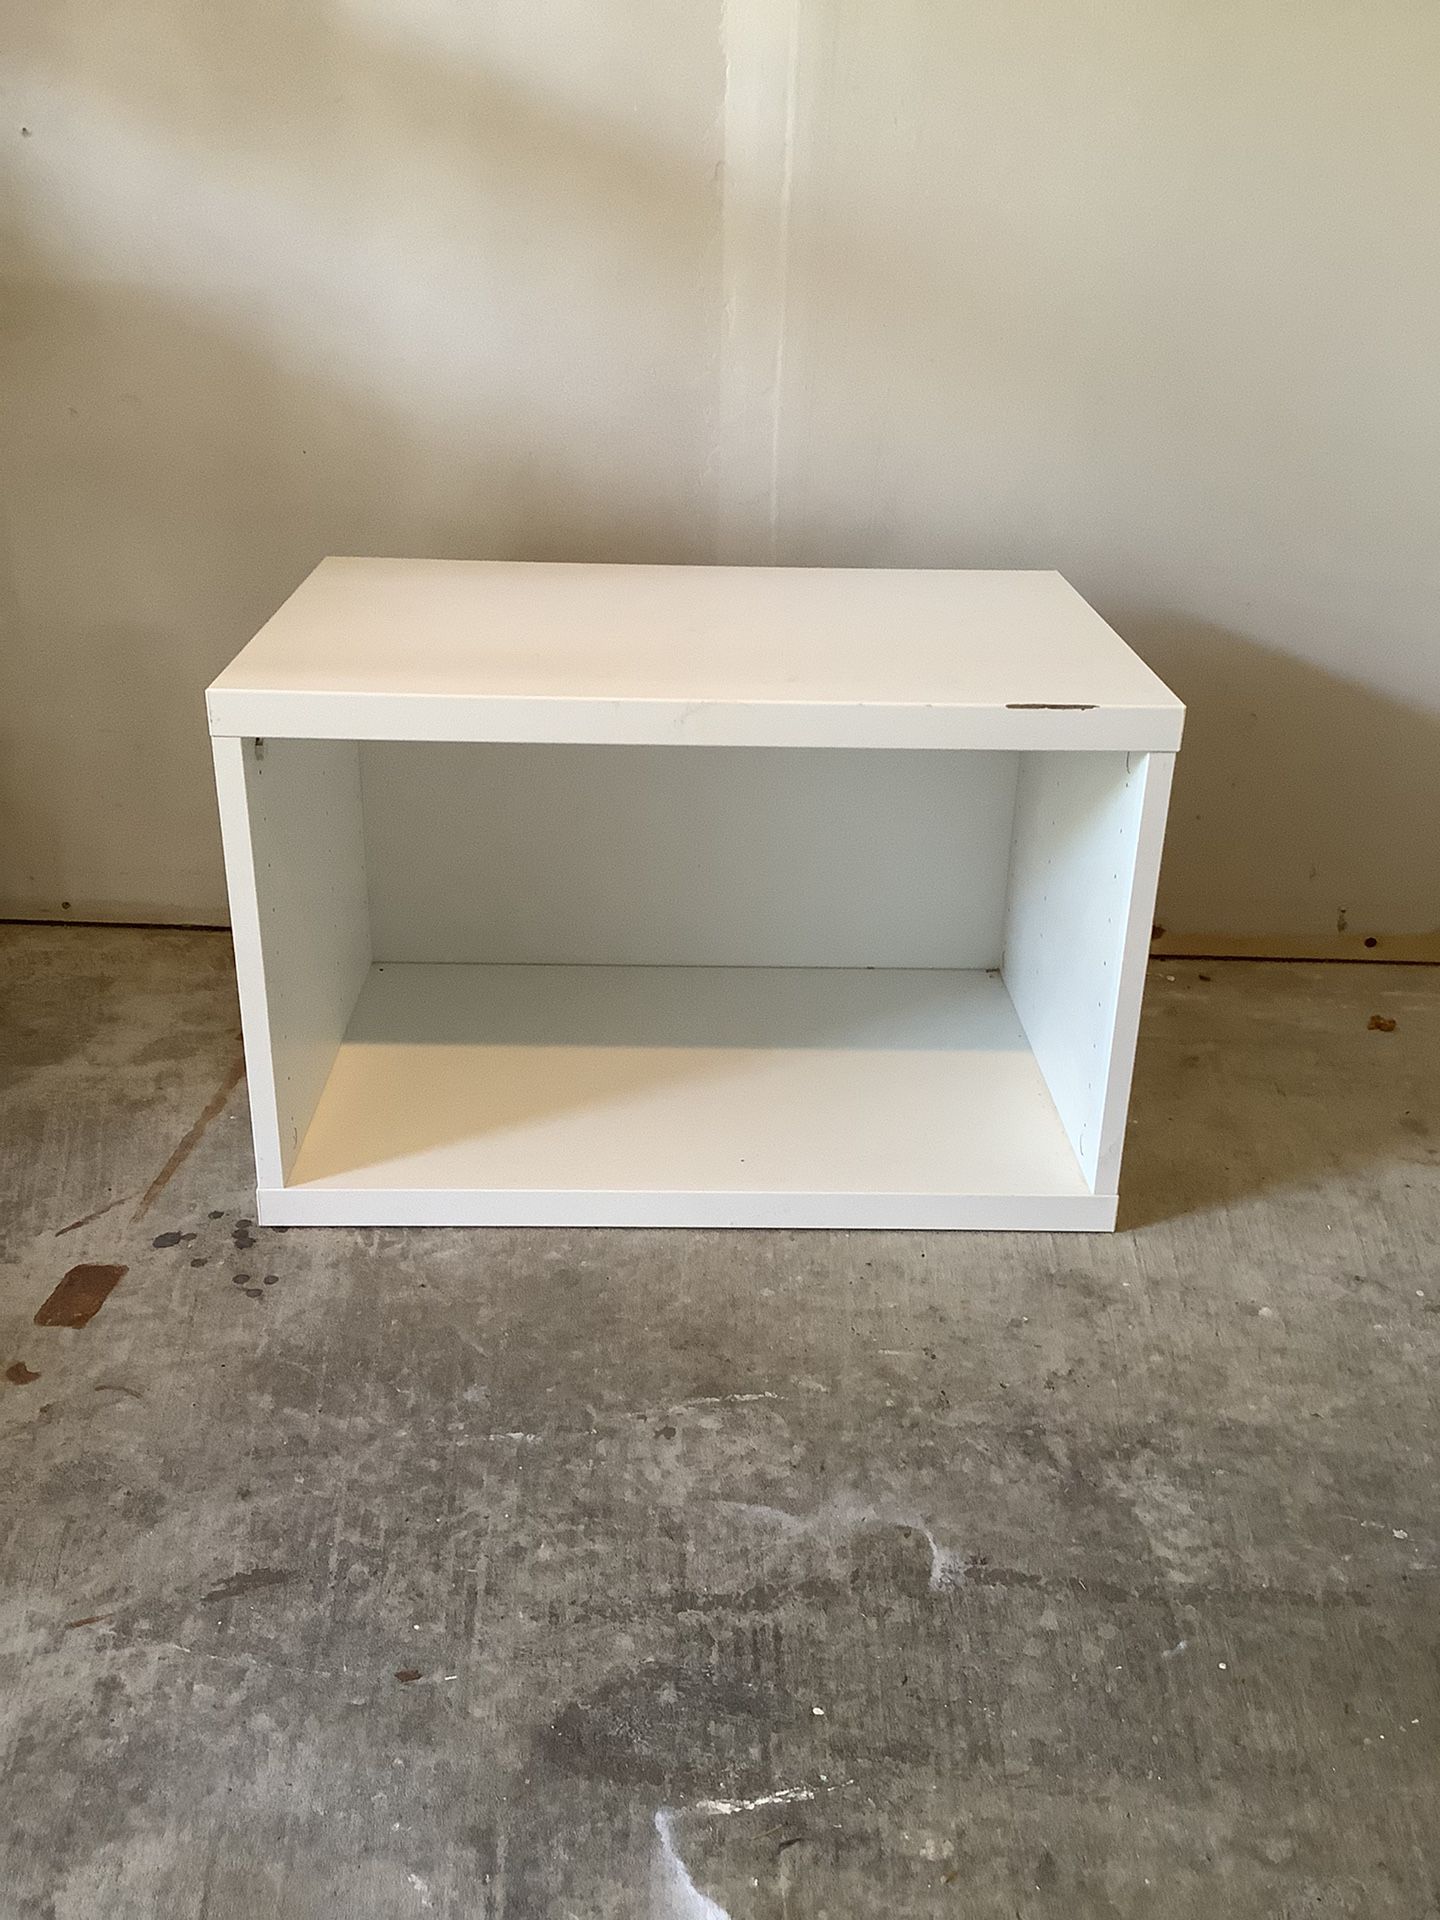 Project 15”x15”x23” IKEA-type Single Shelf or Shoe Rack